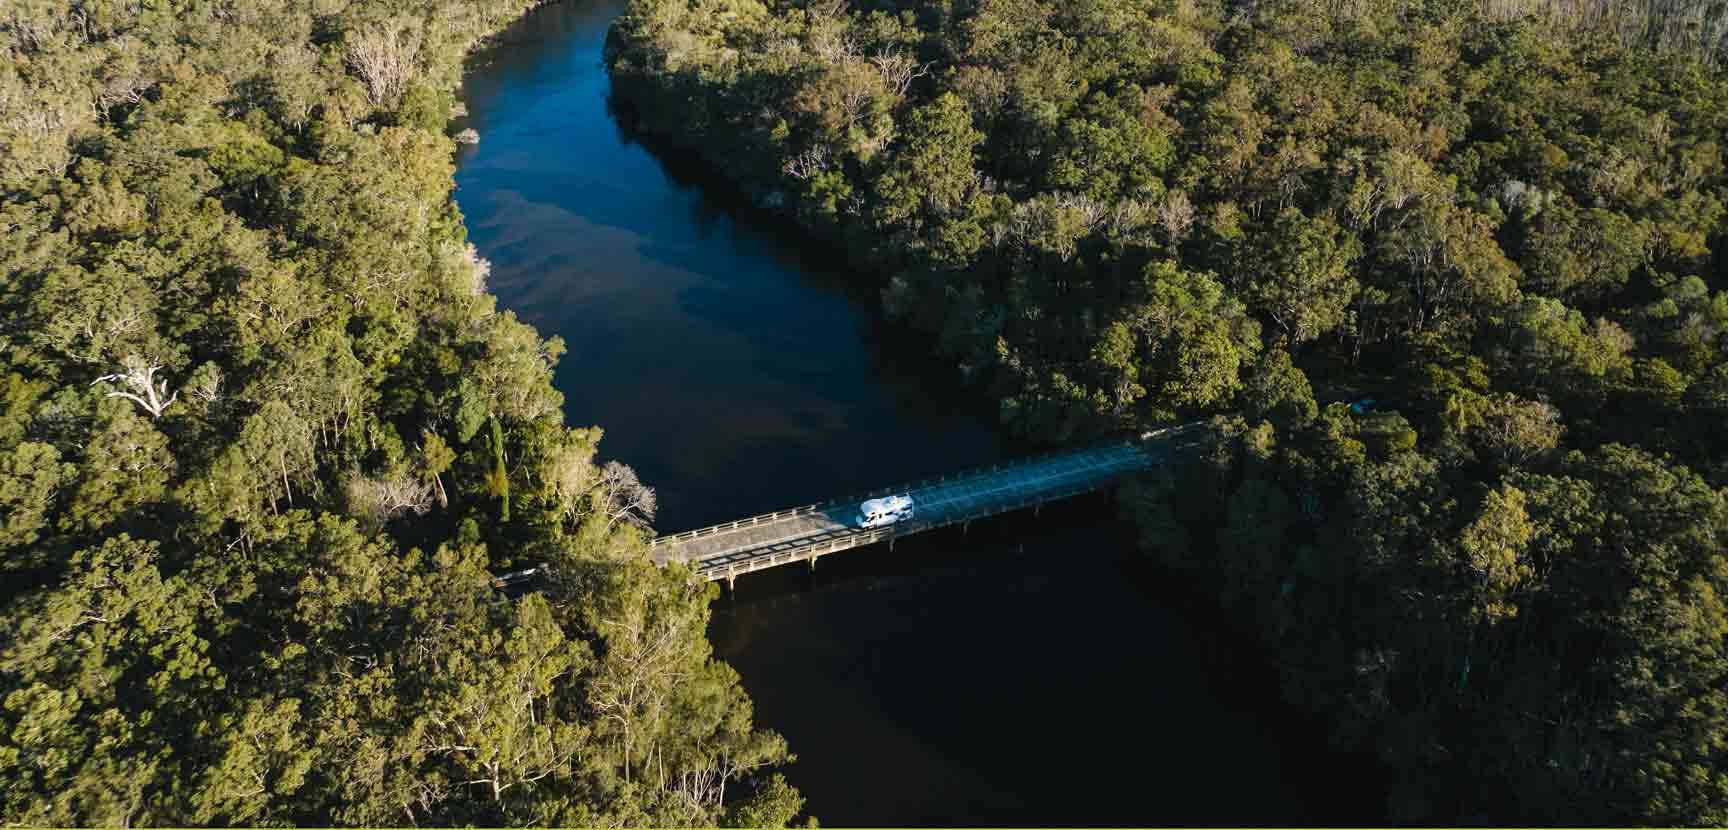 Motorhome on bridge over water